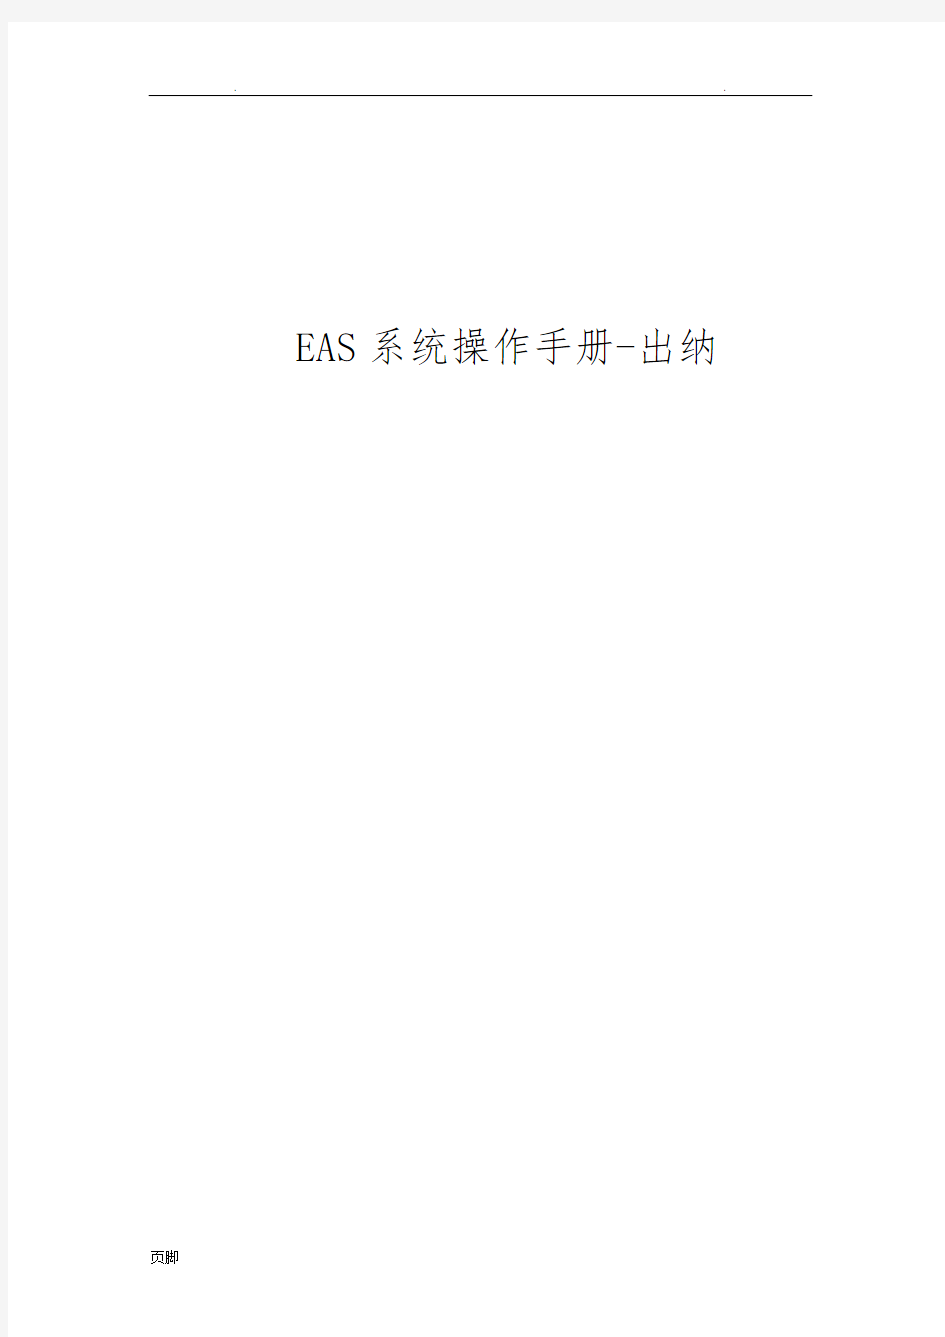 EAS系统标准操作手册-出纳管理